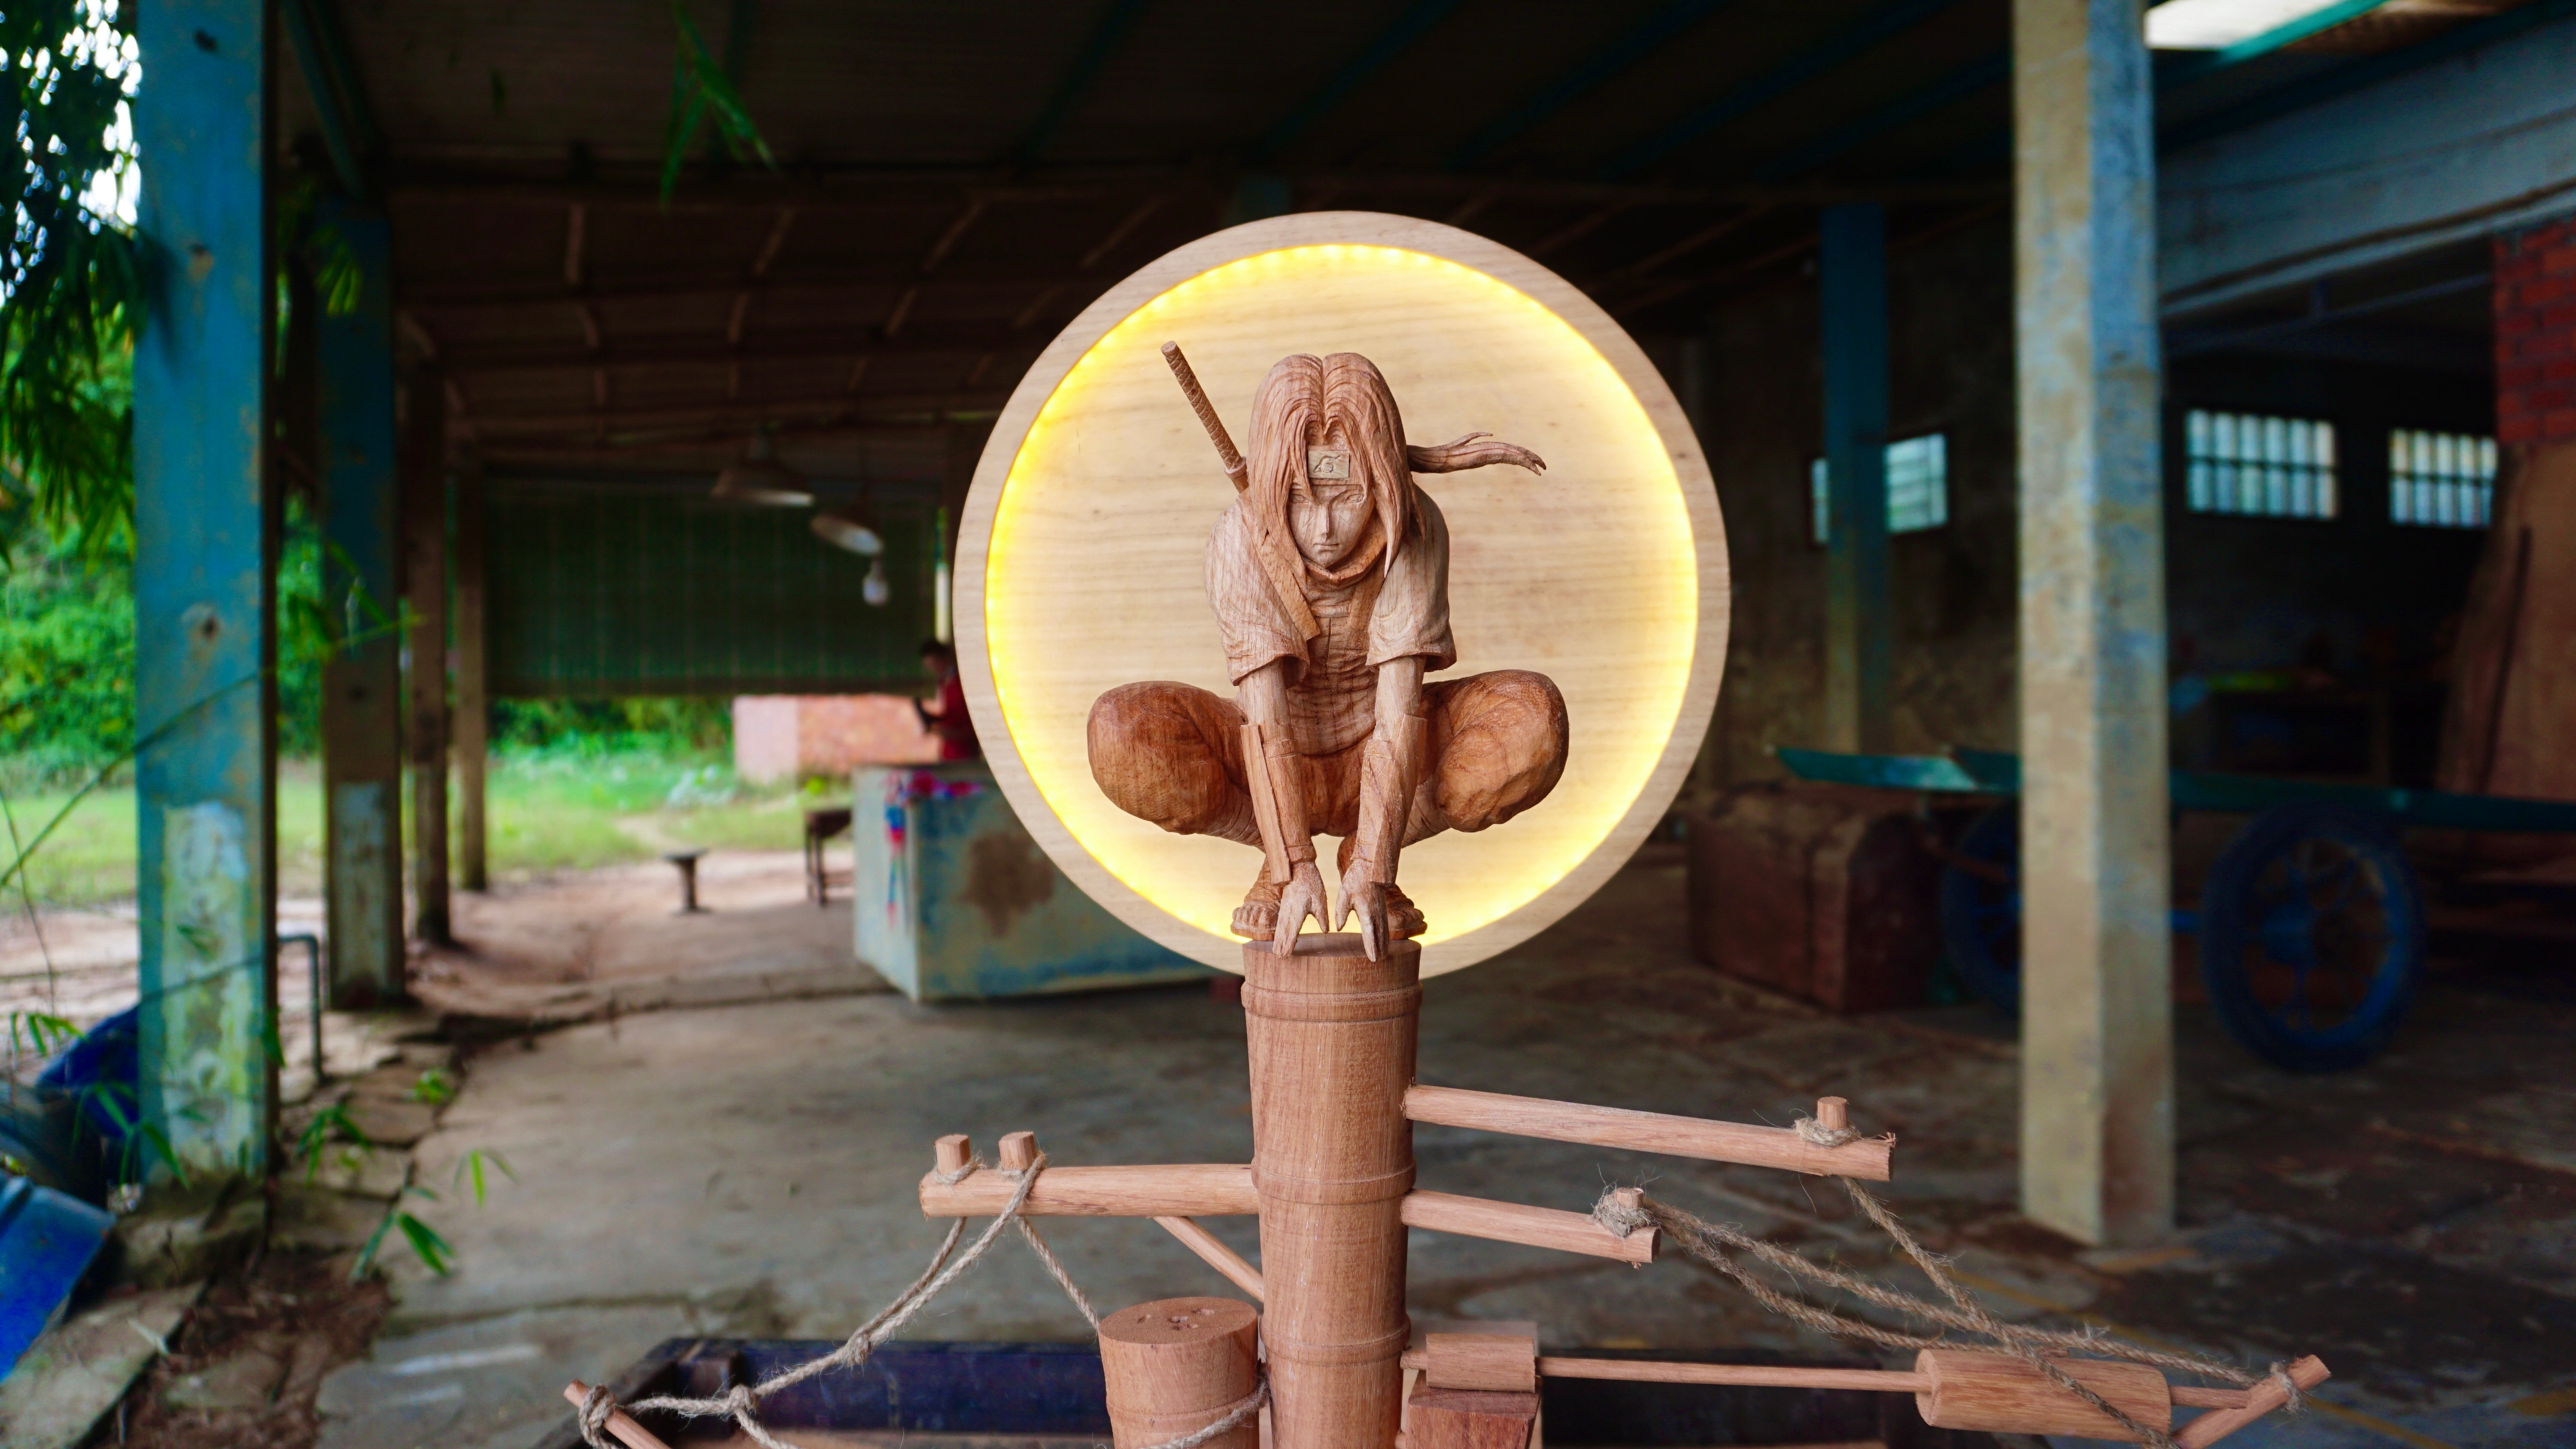 Itachi Uchiha - The Moonlight Figure Wood Carving - - Woodart Vietnam 